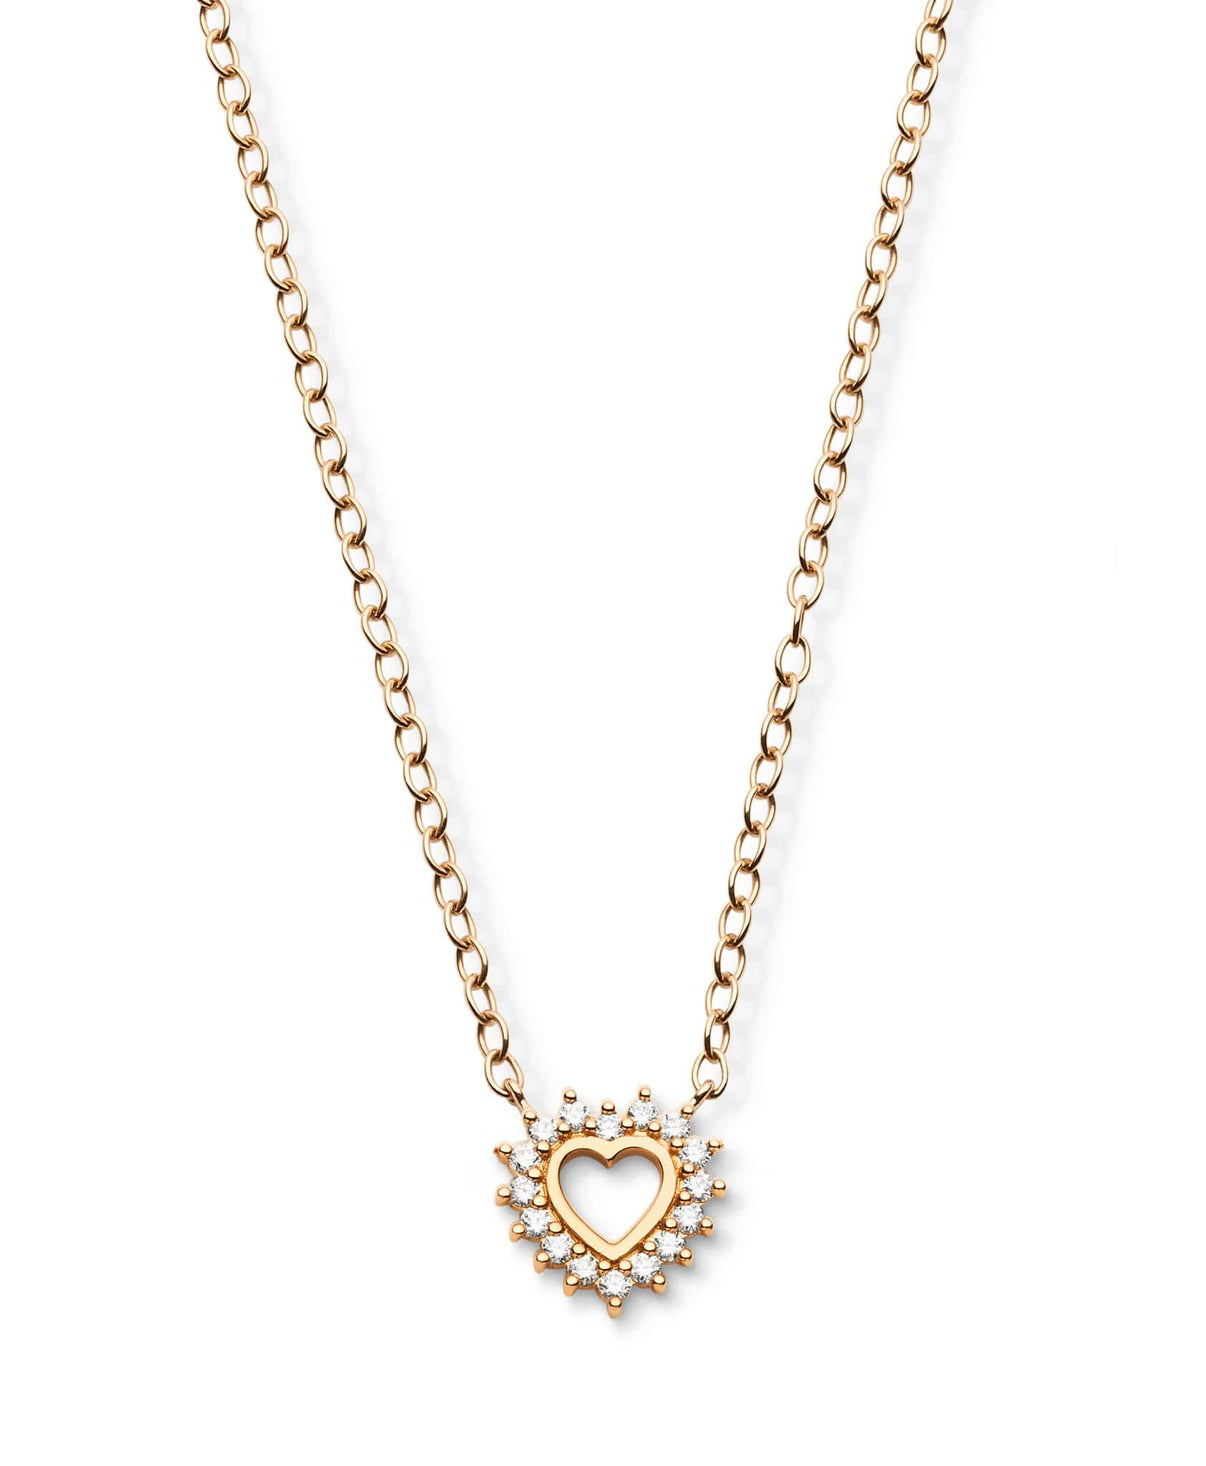 Medium Love Pendant: Discover Luxury Fine Jewelry | Nouvel Heritage || Yellow Gold